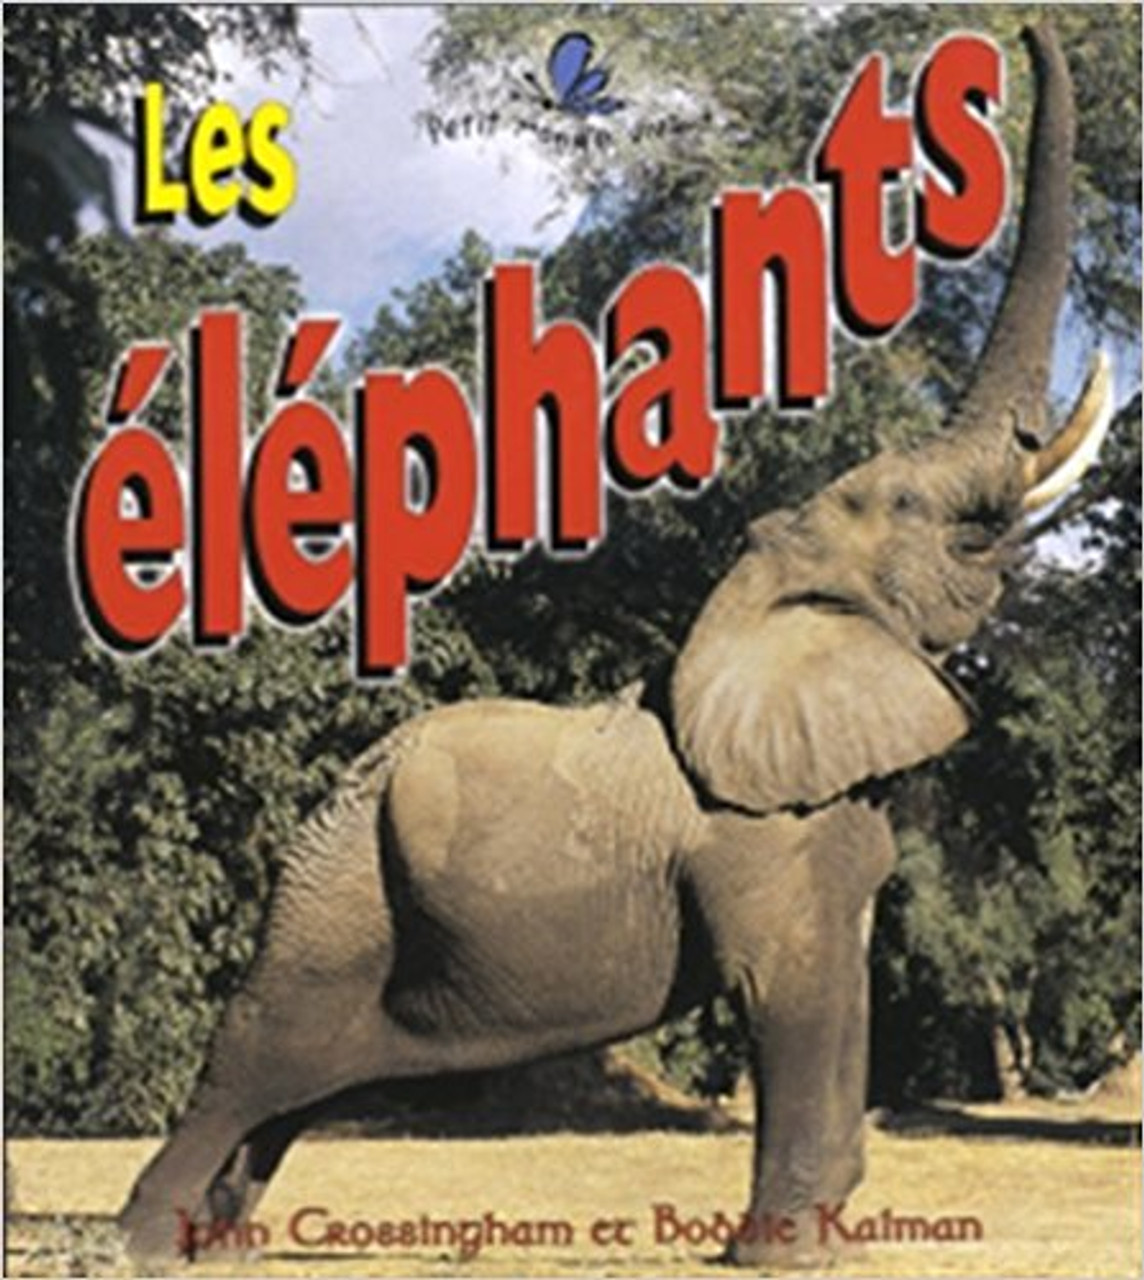 Les Elephants by John Crossingham